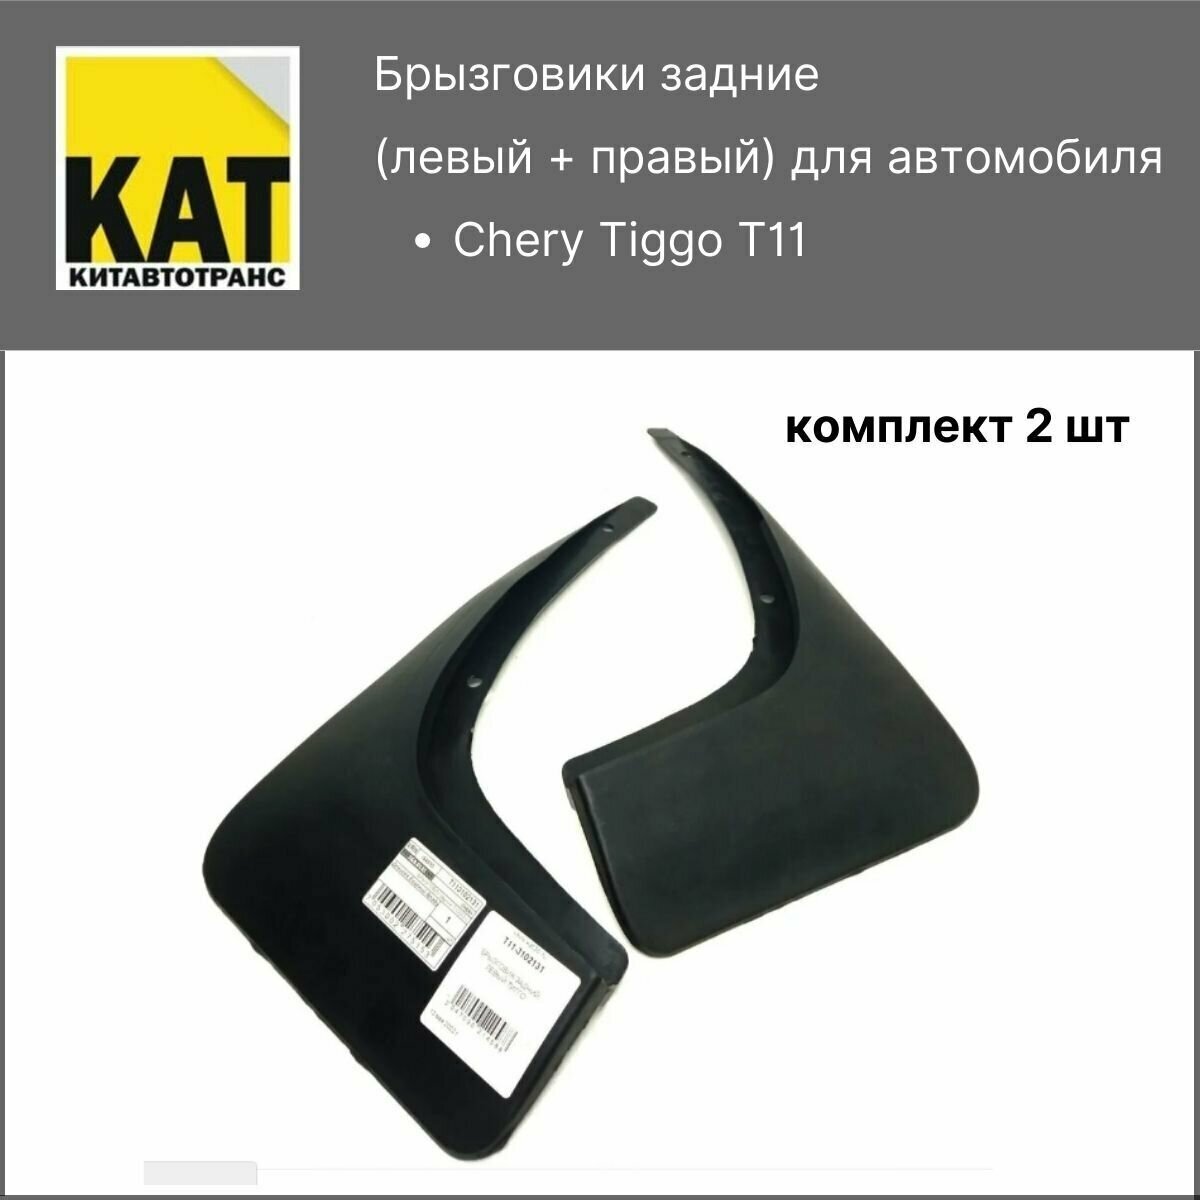 Брызговики задние Чери Тигго Т11 (Chery Tiggo T11) комплект 2шт